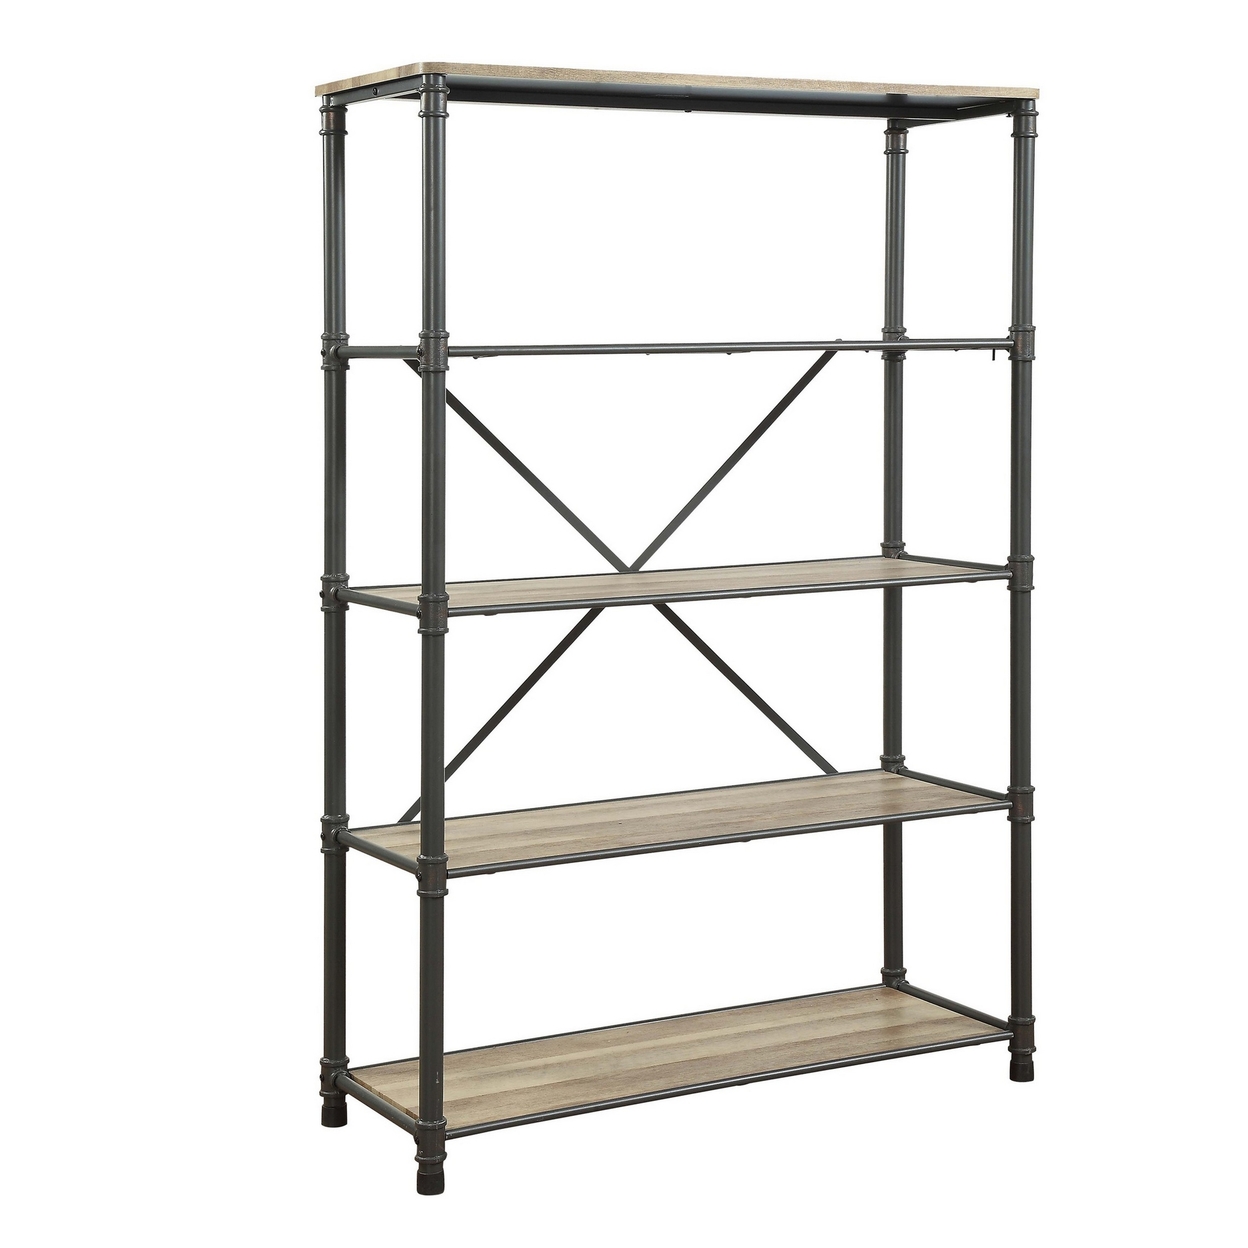 Pipe Inspired Steel Frame Bookshelf With Five Fixed Shelves, Oak Brown And Sandy Gray- Saltoro Sherpi